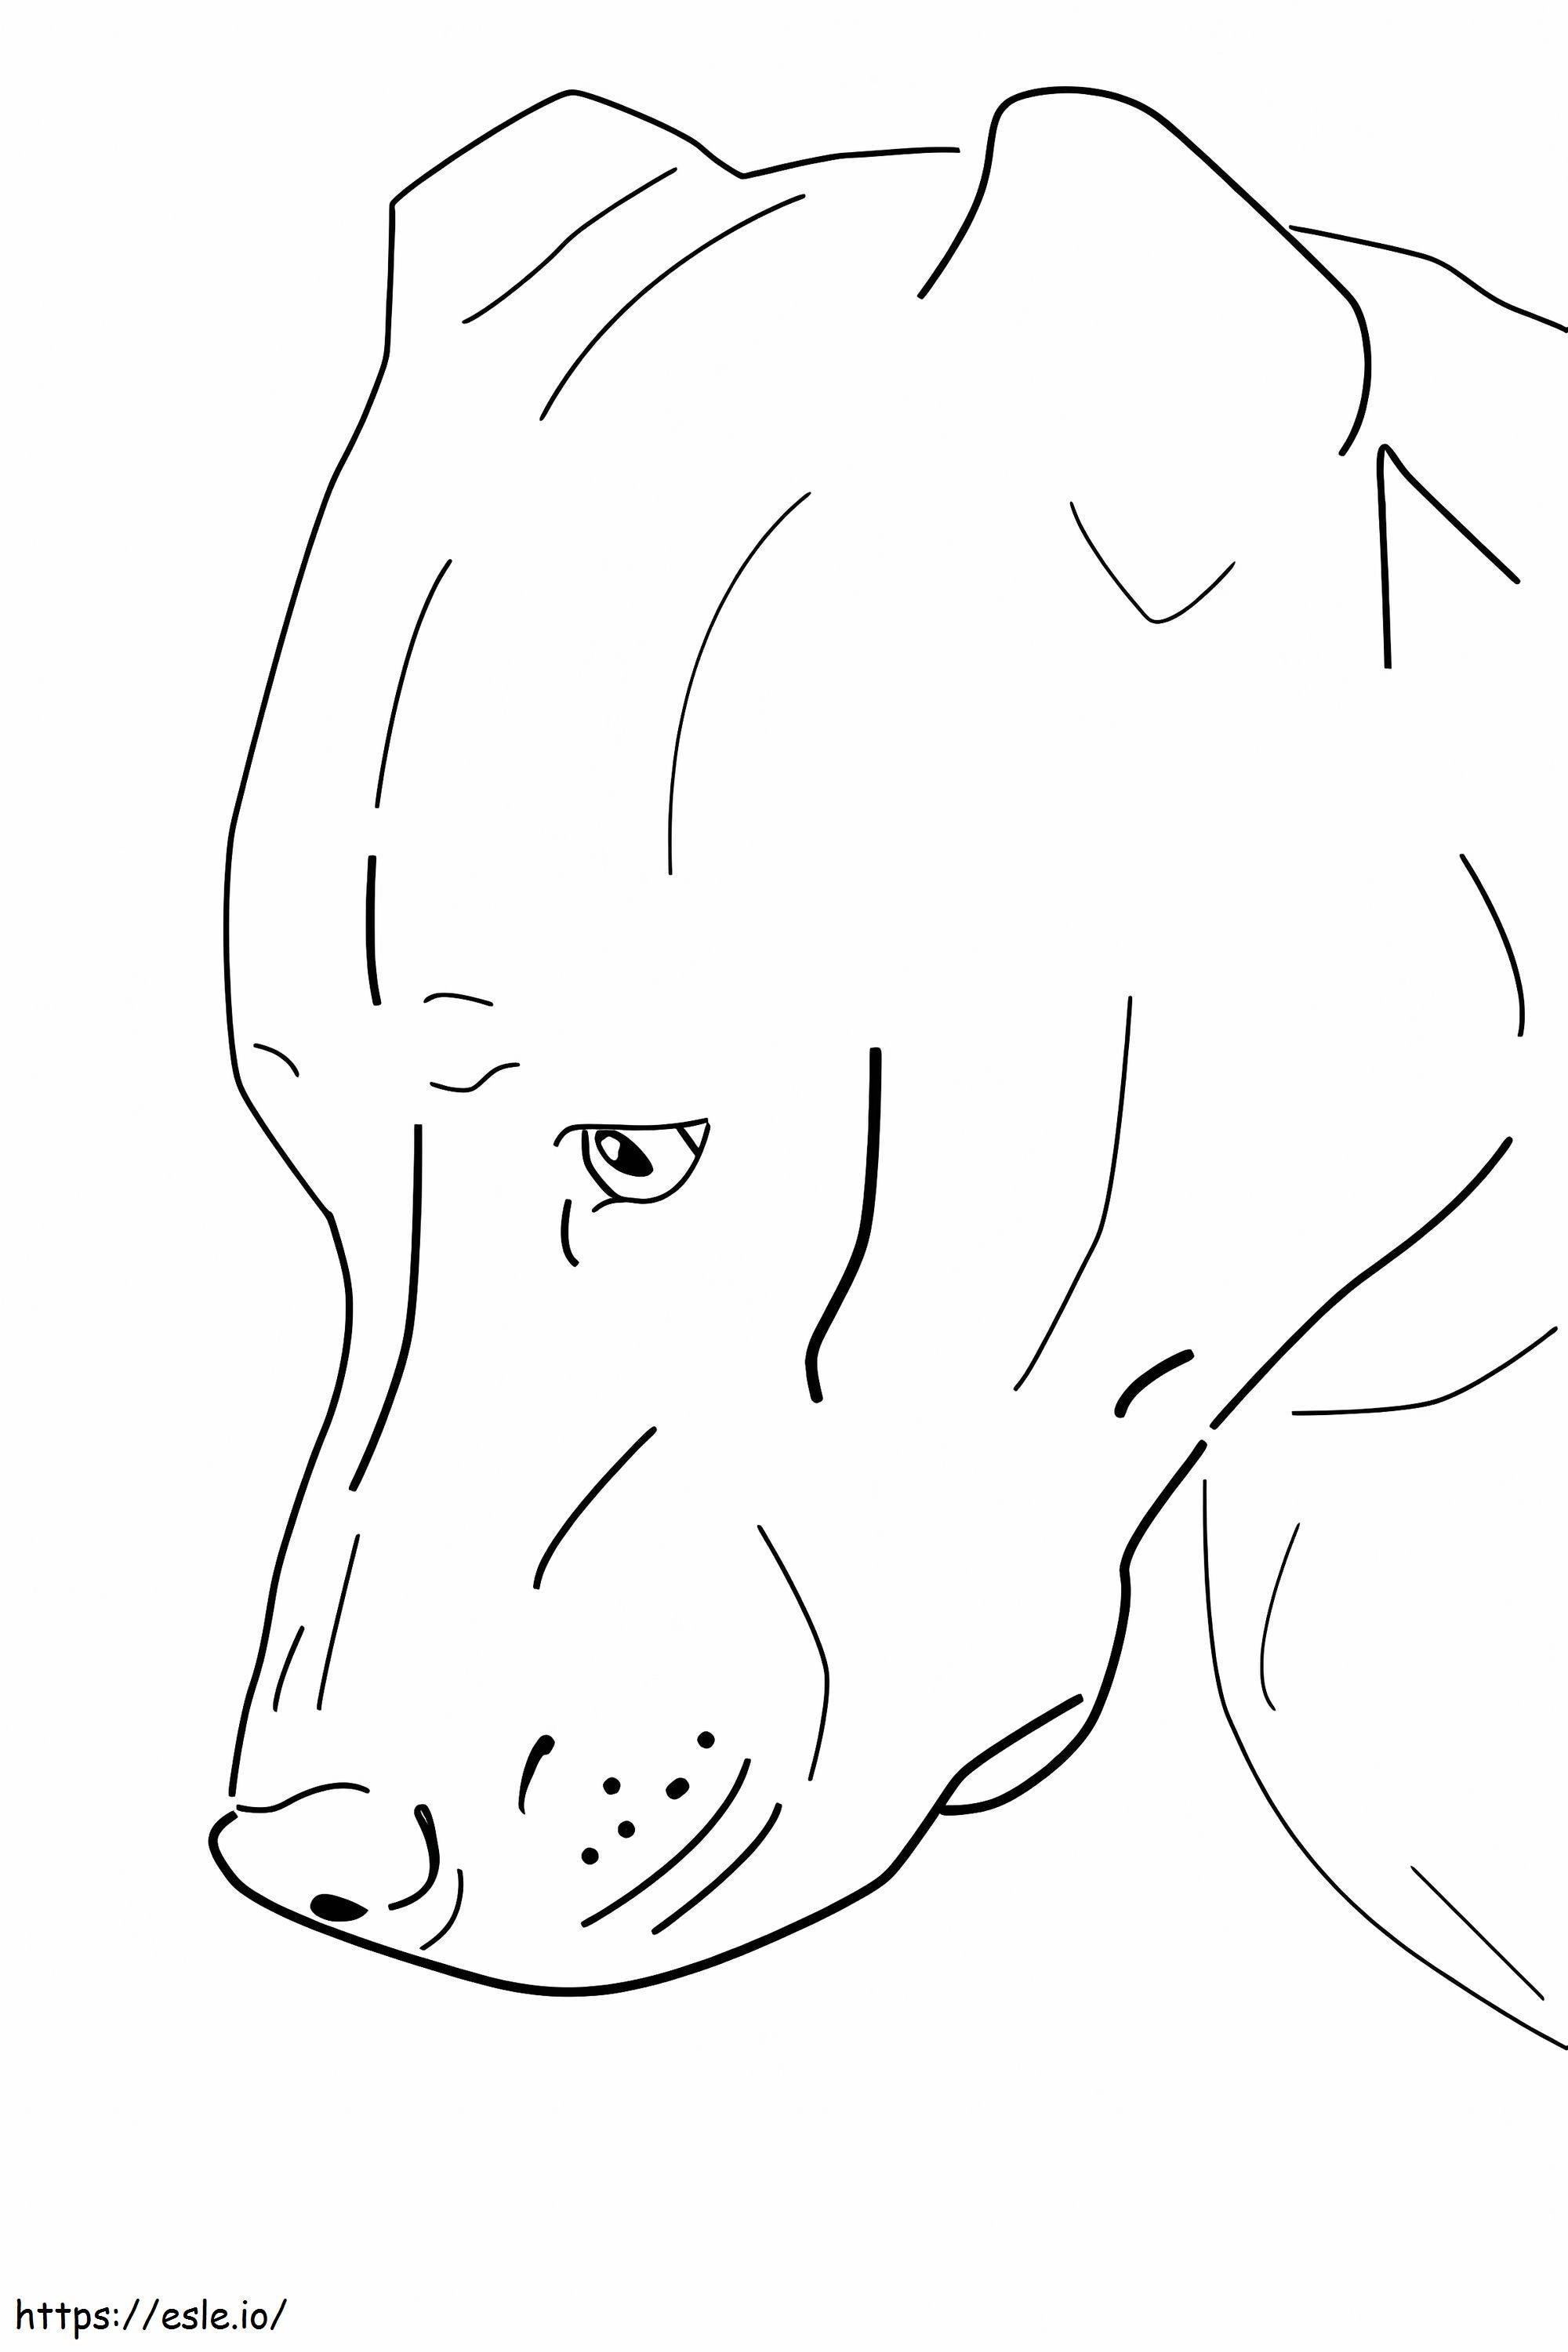 Ein Pitbull-Hund ausmalbilder